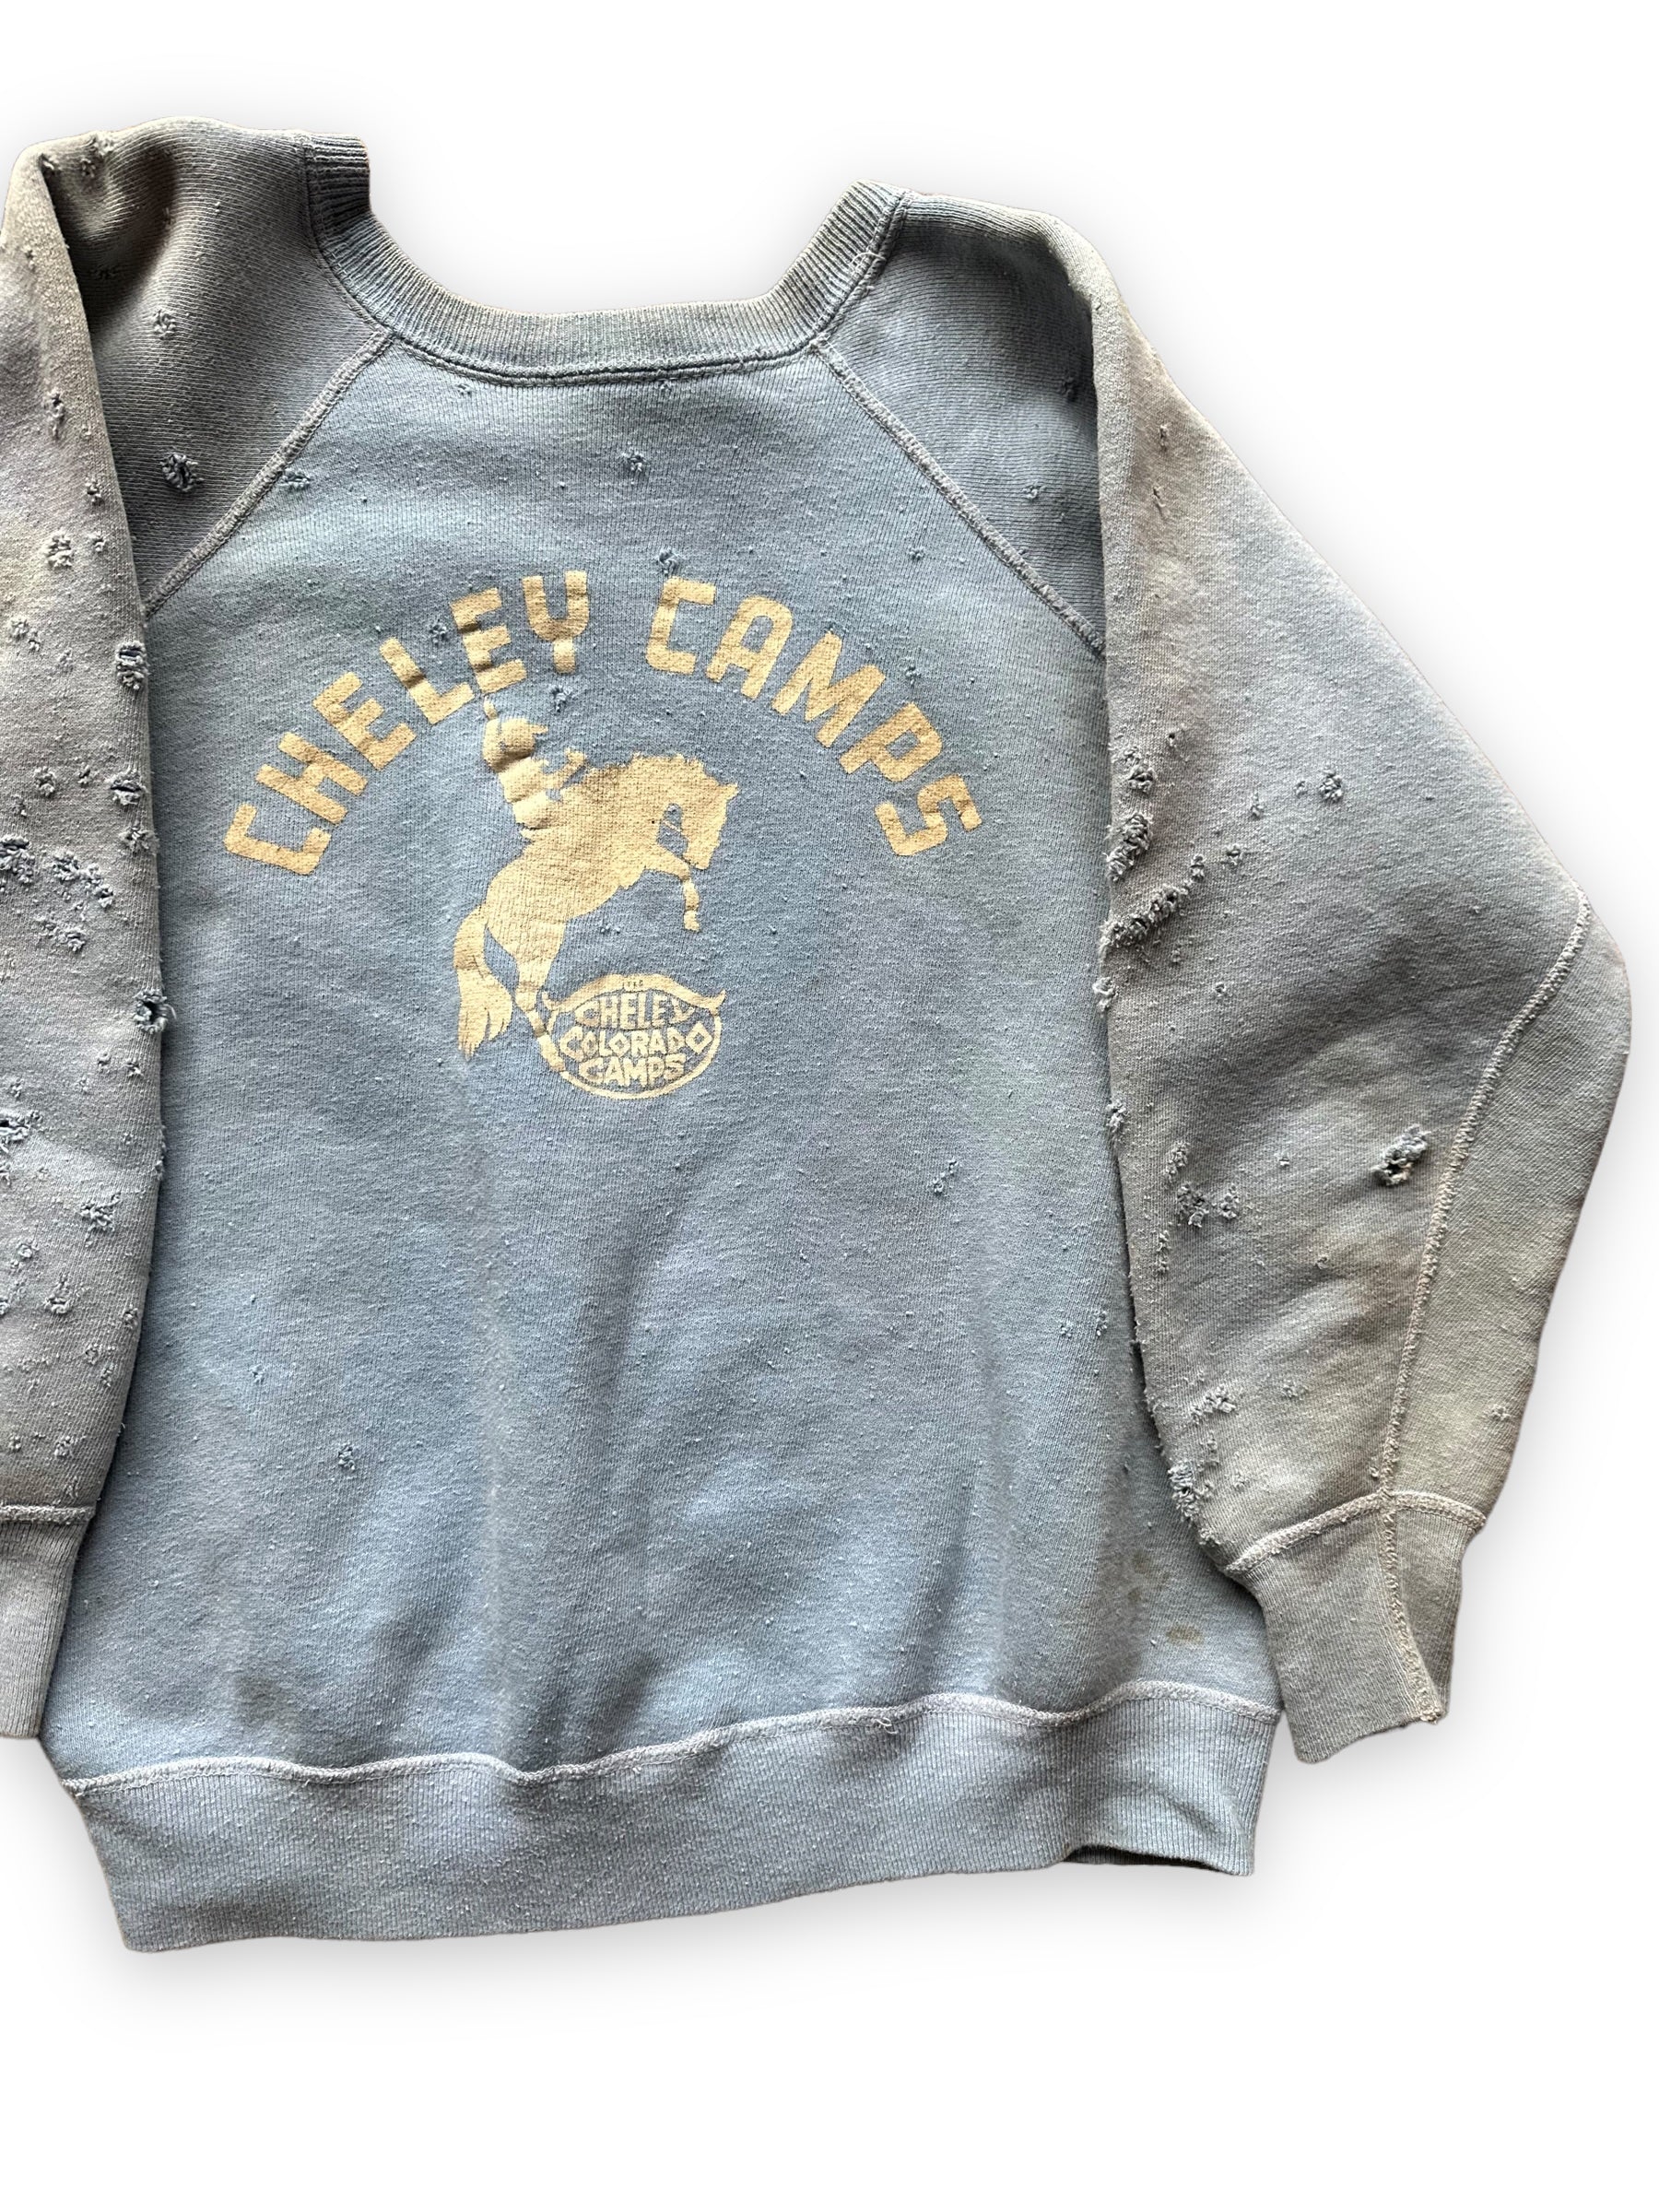 Left Front View on Vintage Distressed Cheley Camps Colorado Crewneck Sweatshirt | Vintage Crewneck Seattle | Barn Owl Vintage Clothing